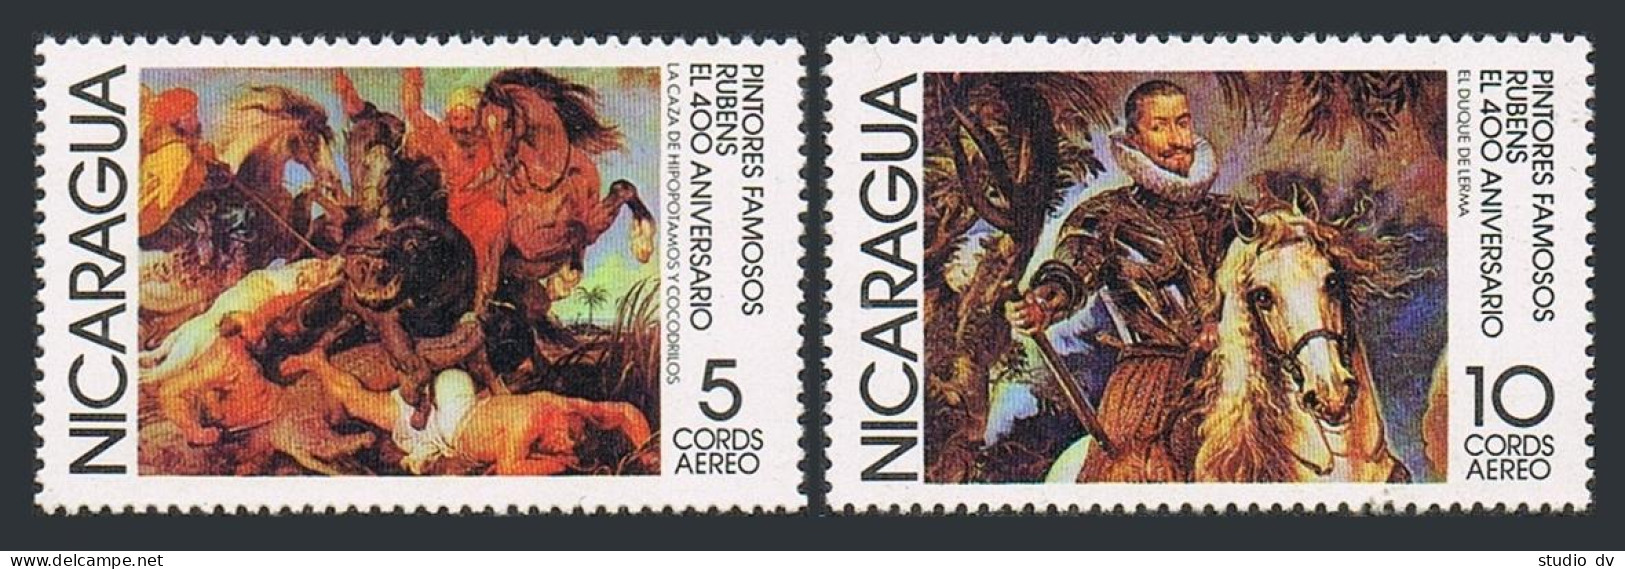 Nicaragua C932-C933,C934, MNH. Mi 2014-2015, Bl.103. Peter Paul Rubens,400, 1978 - Nicaragua